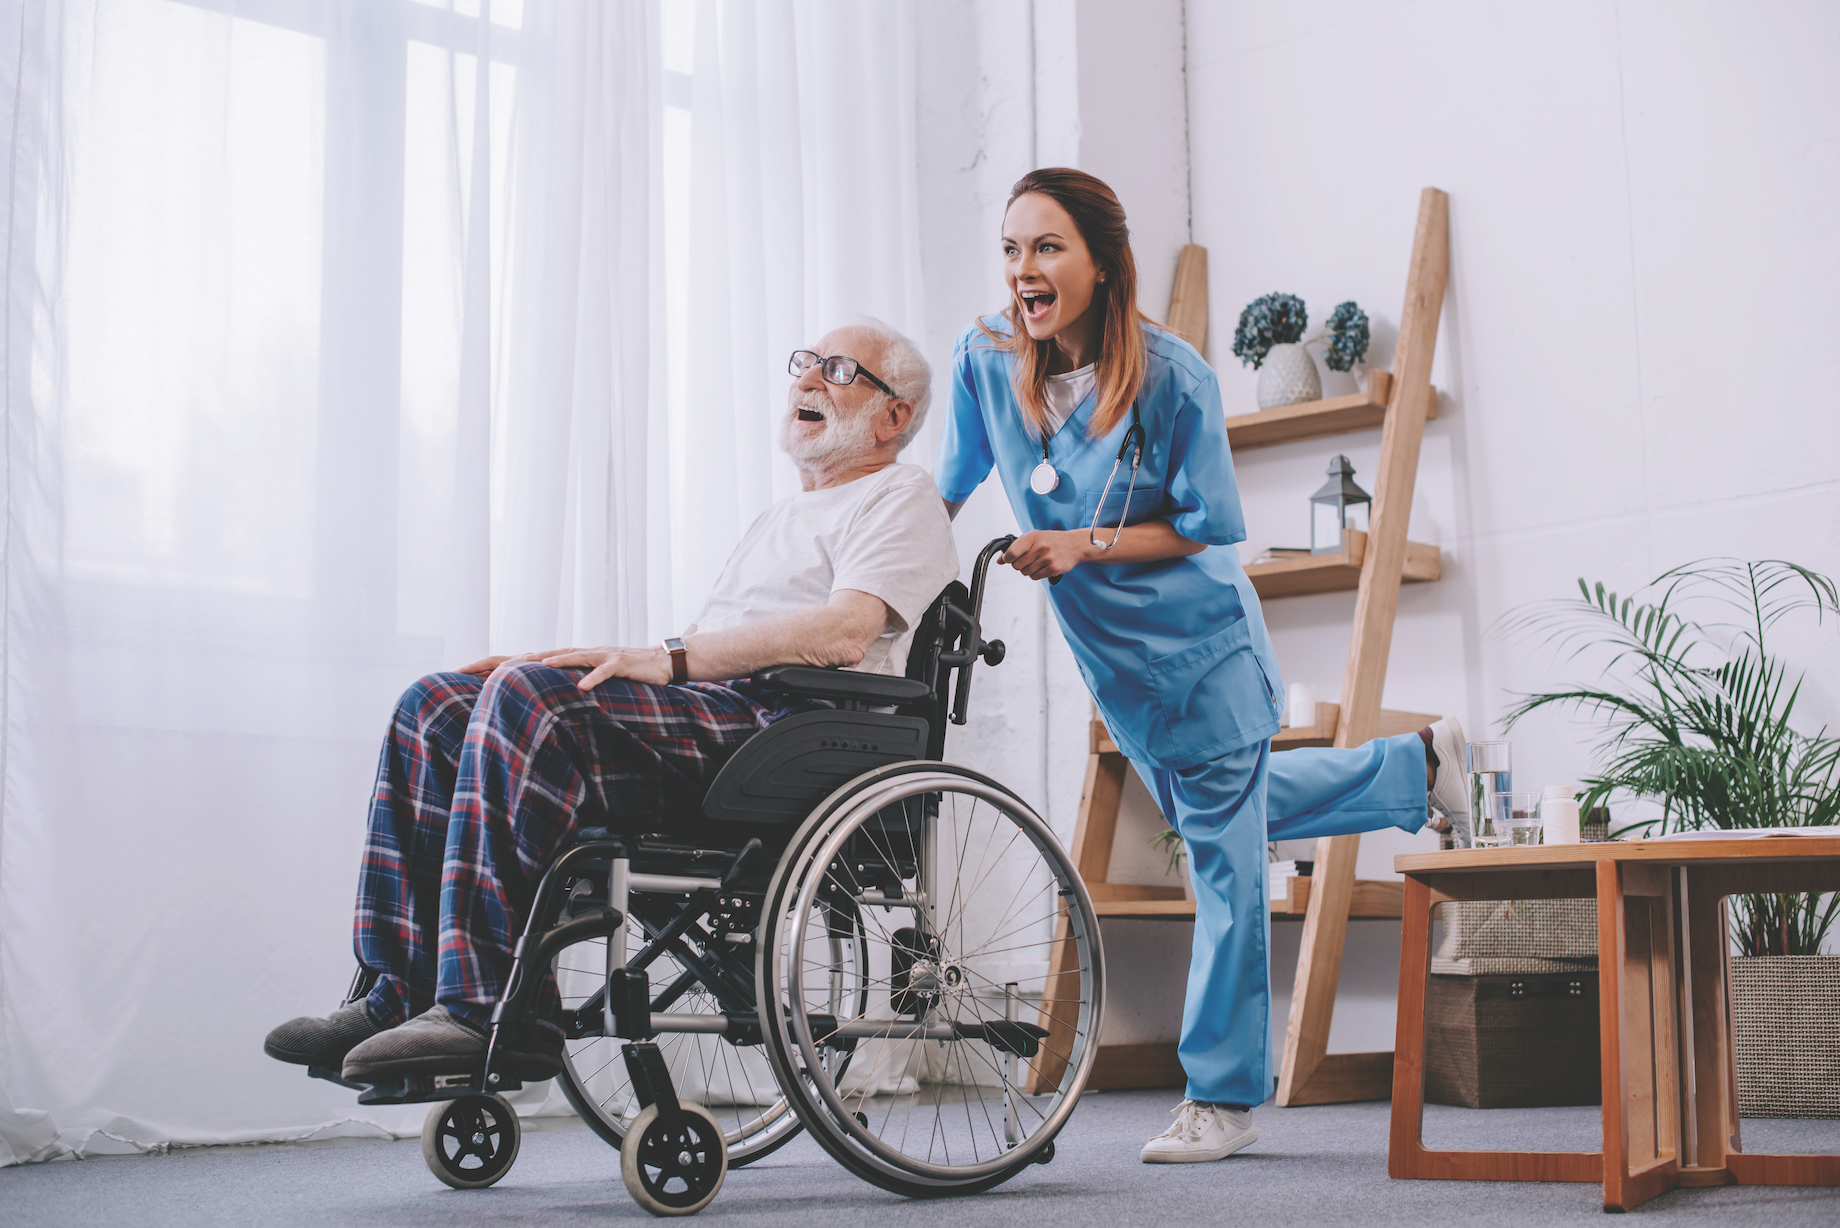 Nurse and senior patient in wheelchair having fun